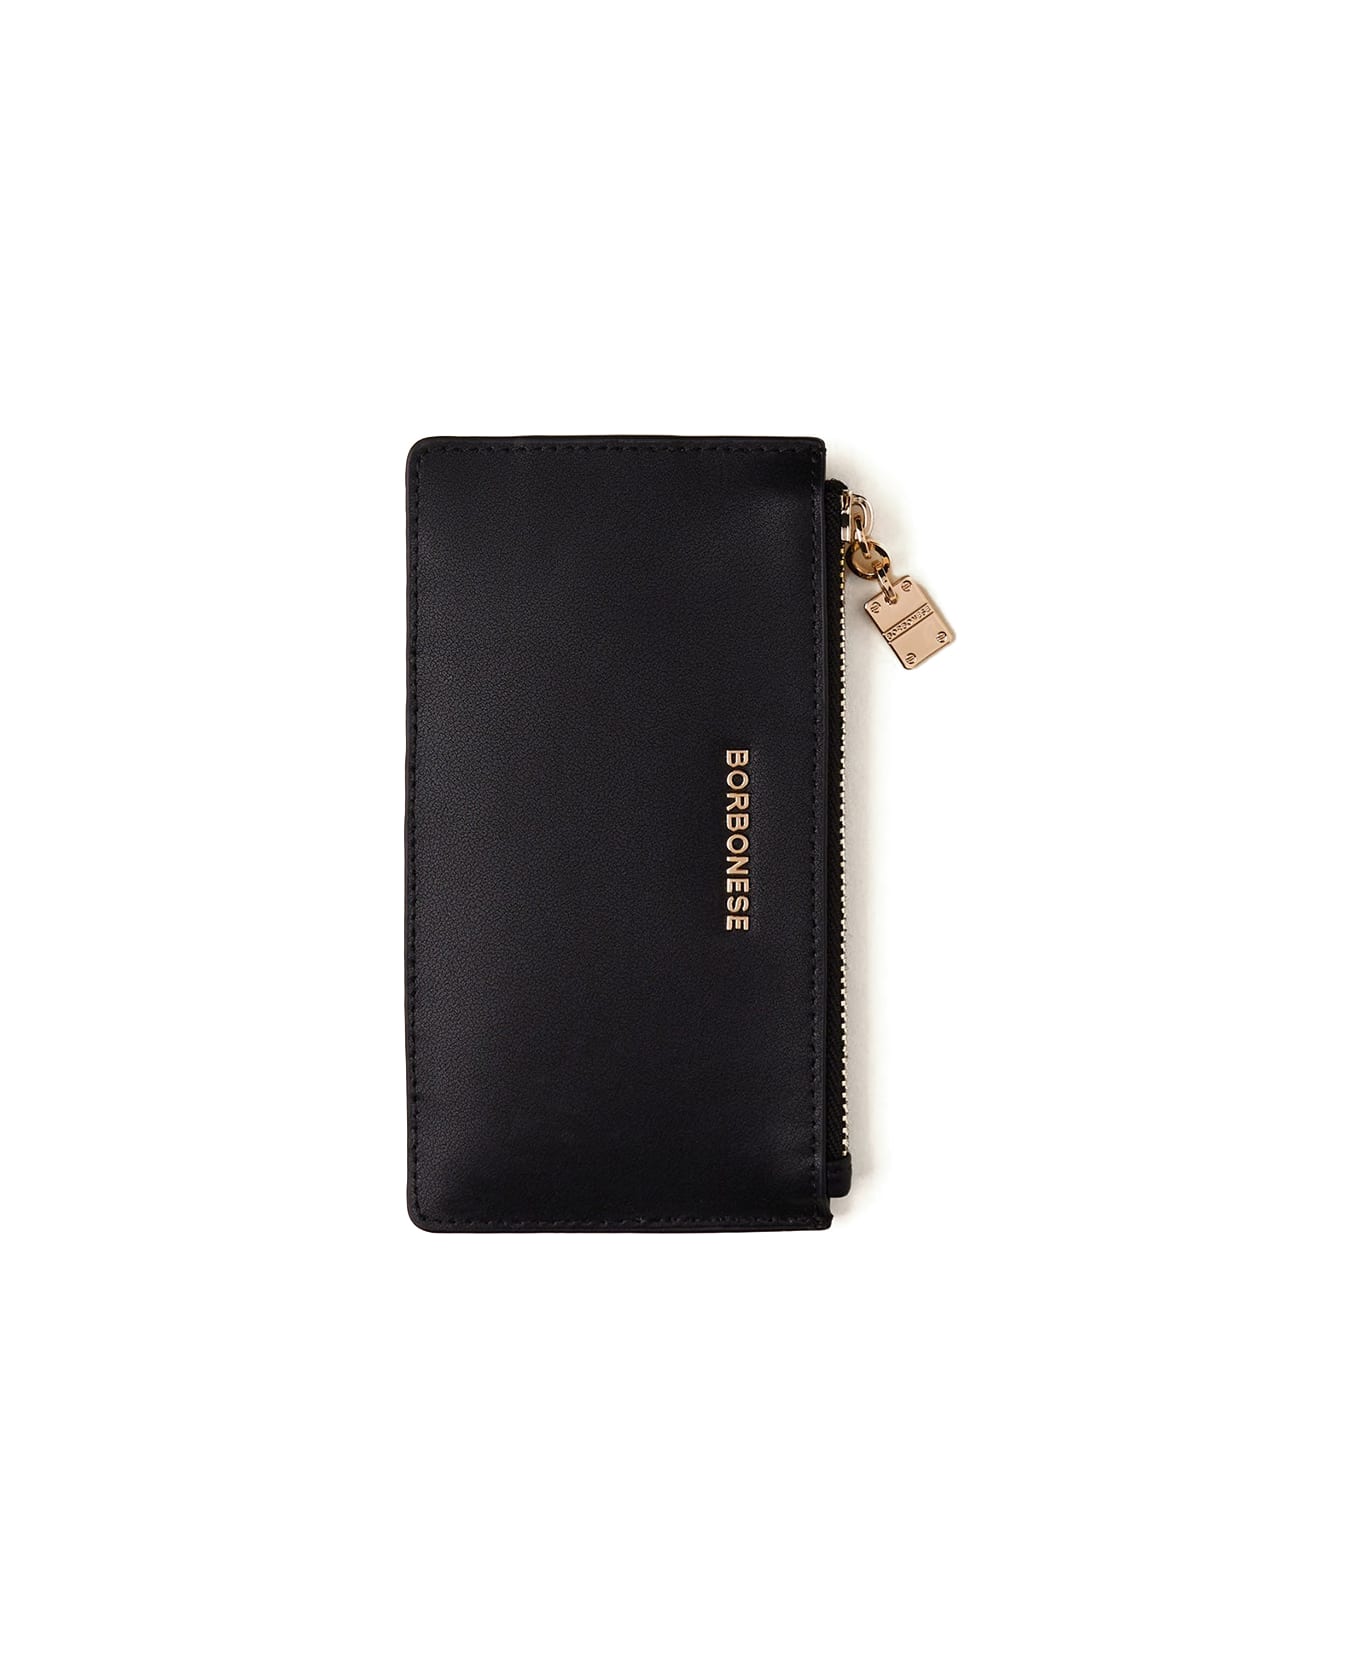 Borbonese Medium Black Leather Card Holder - NERO